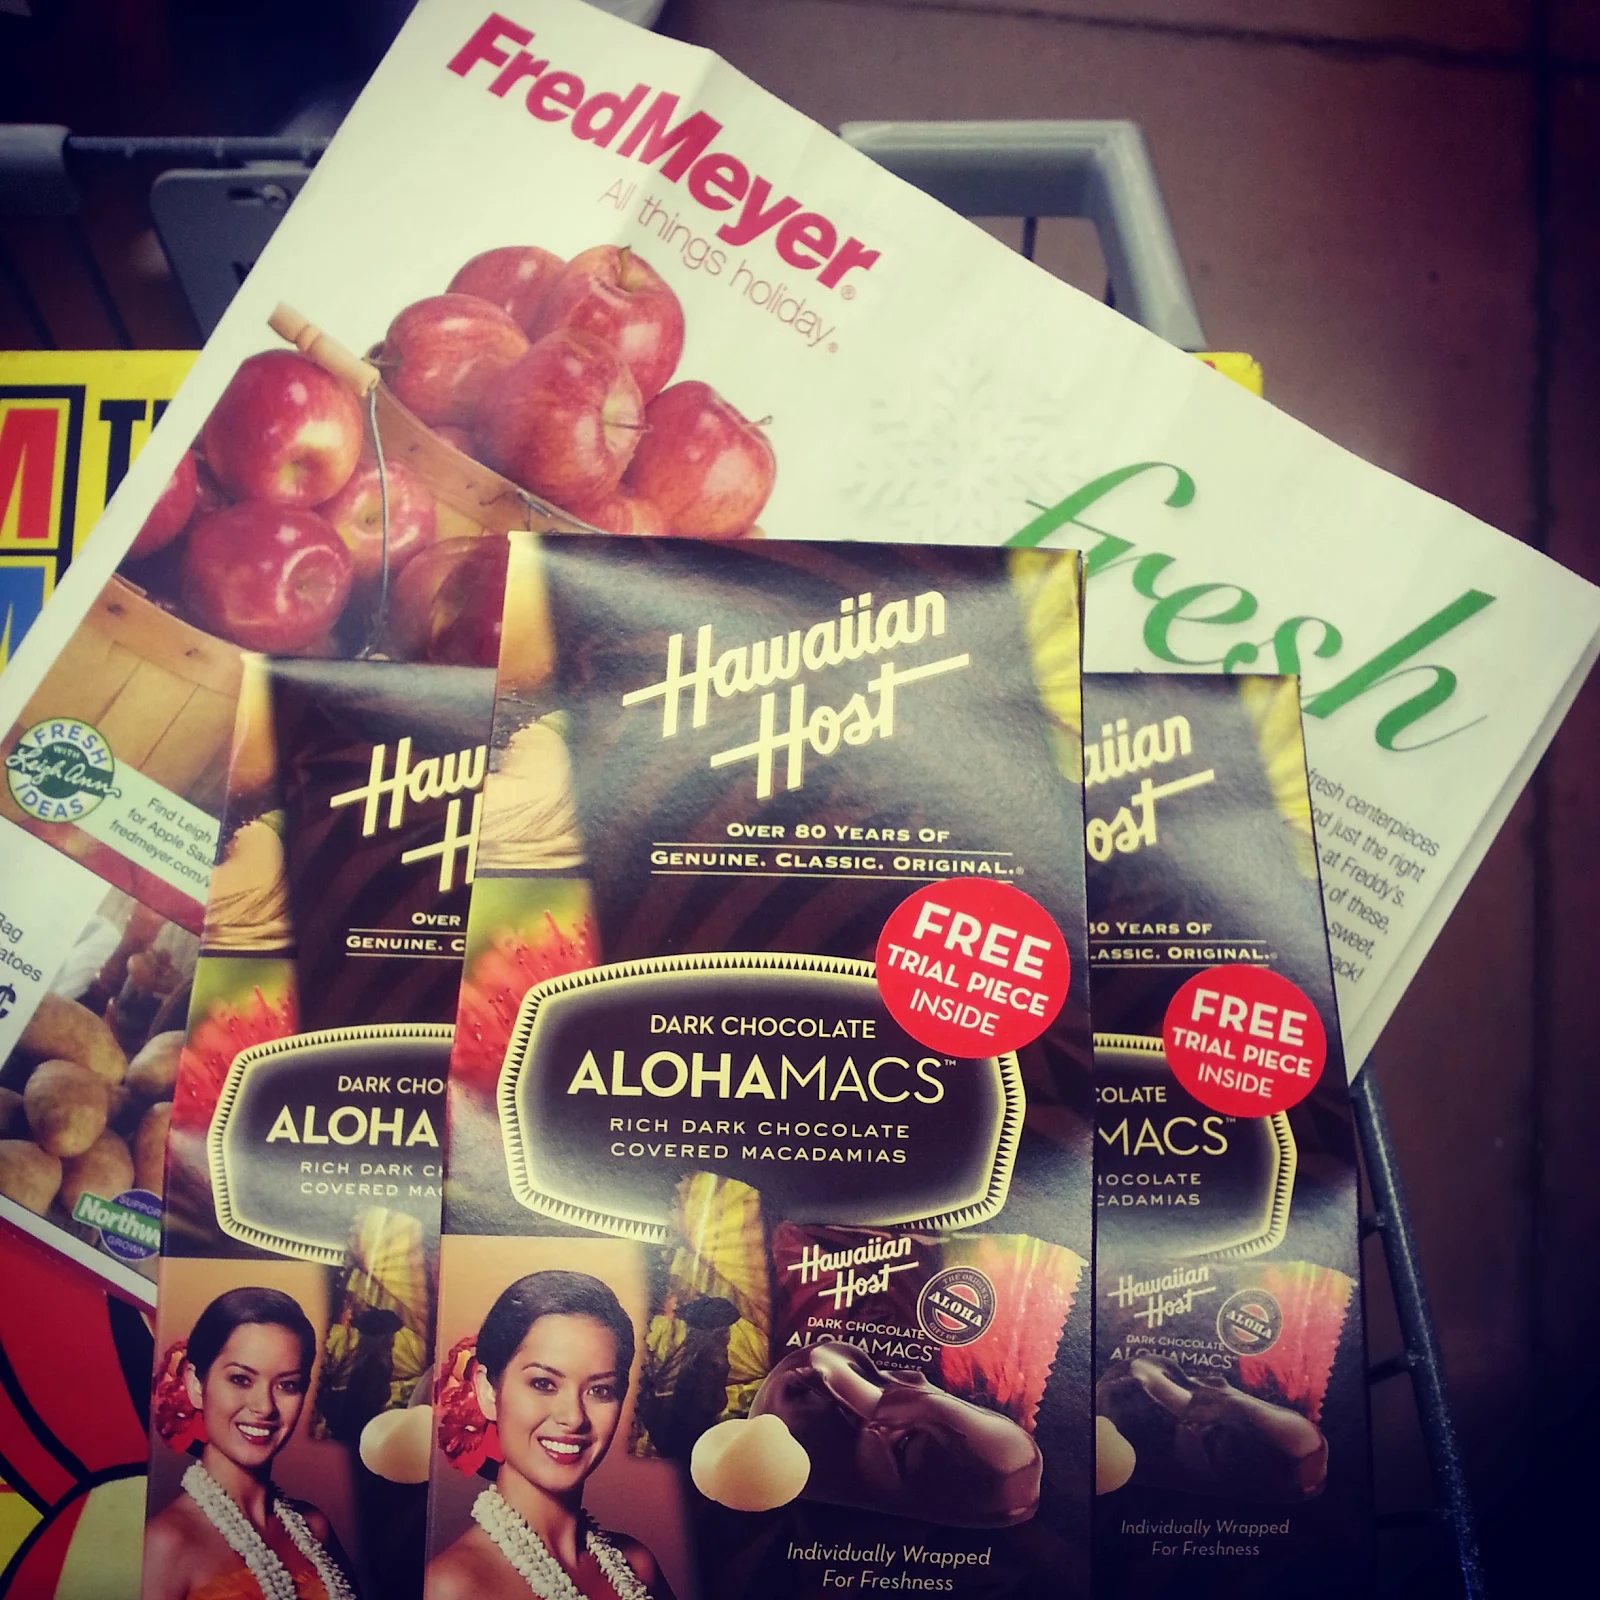 Hawaiian-Host-Dark-Chocolate-AlohaMac-Brownies-Fred-Meyer-AlohaMacs.jpg